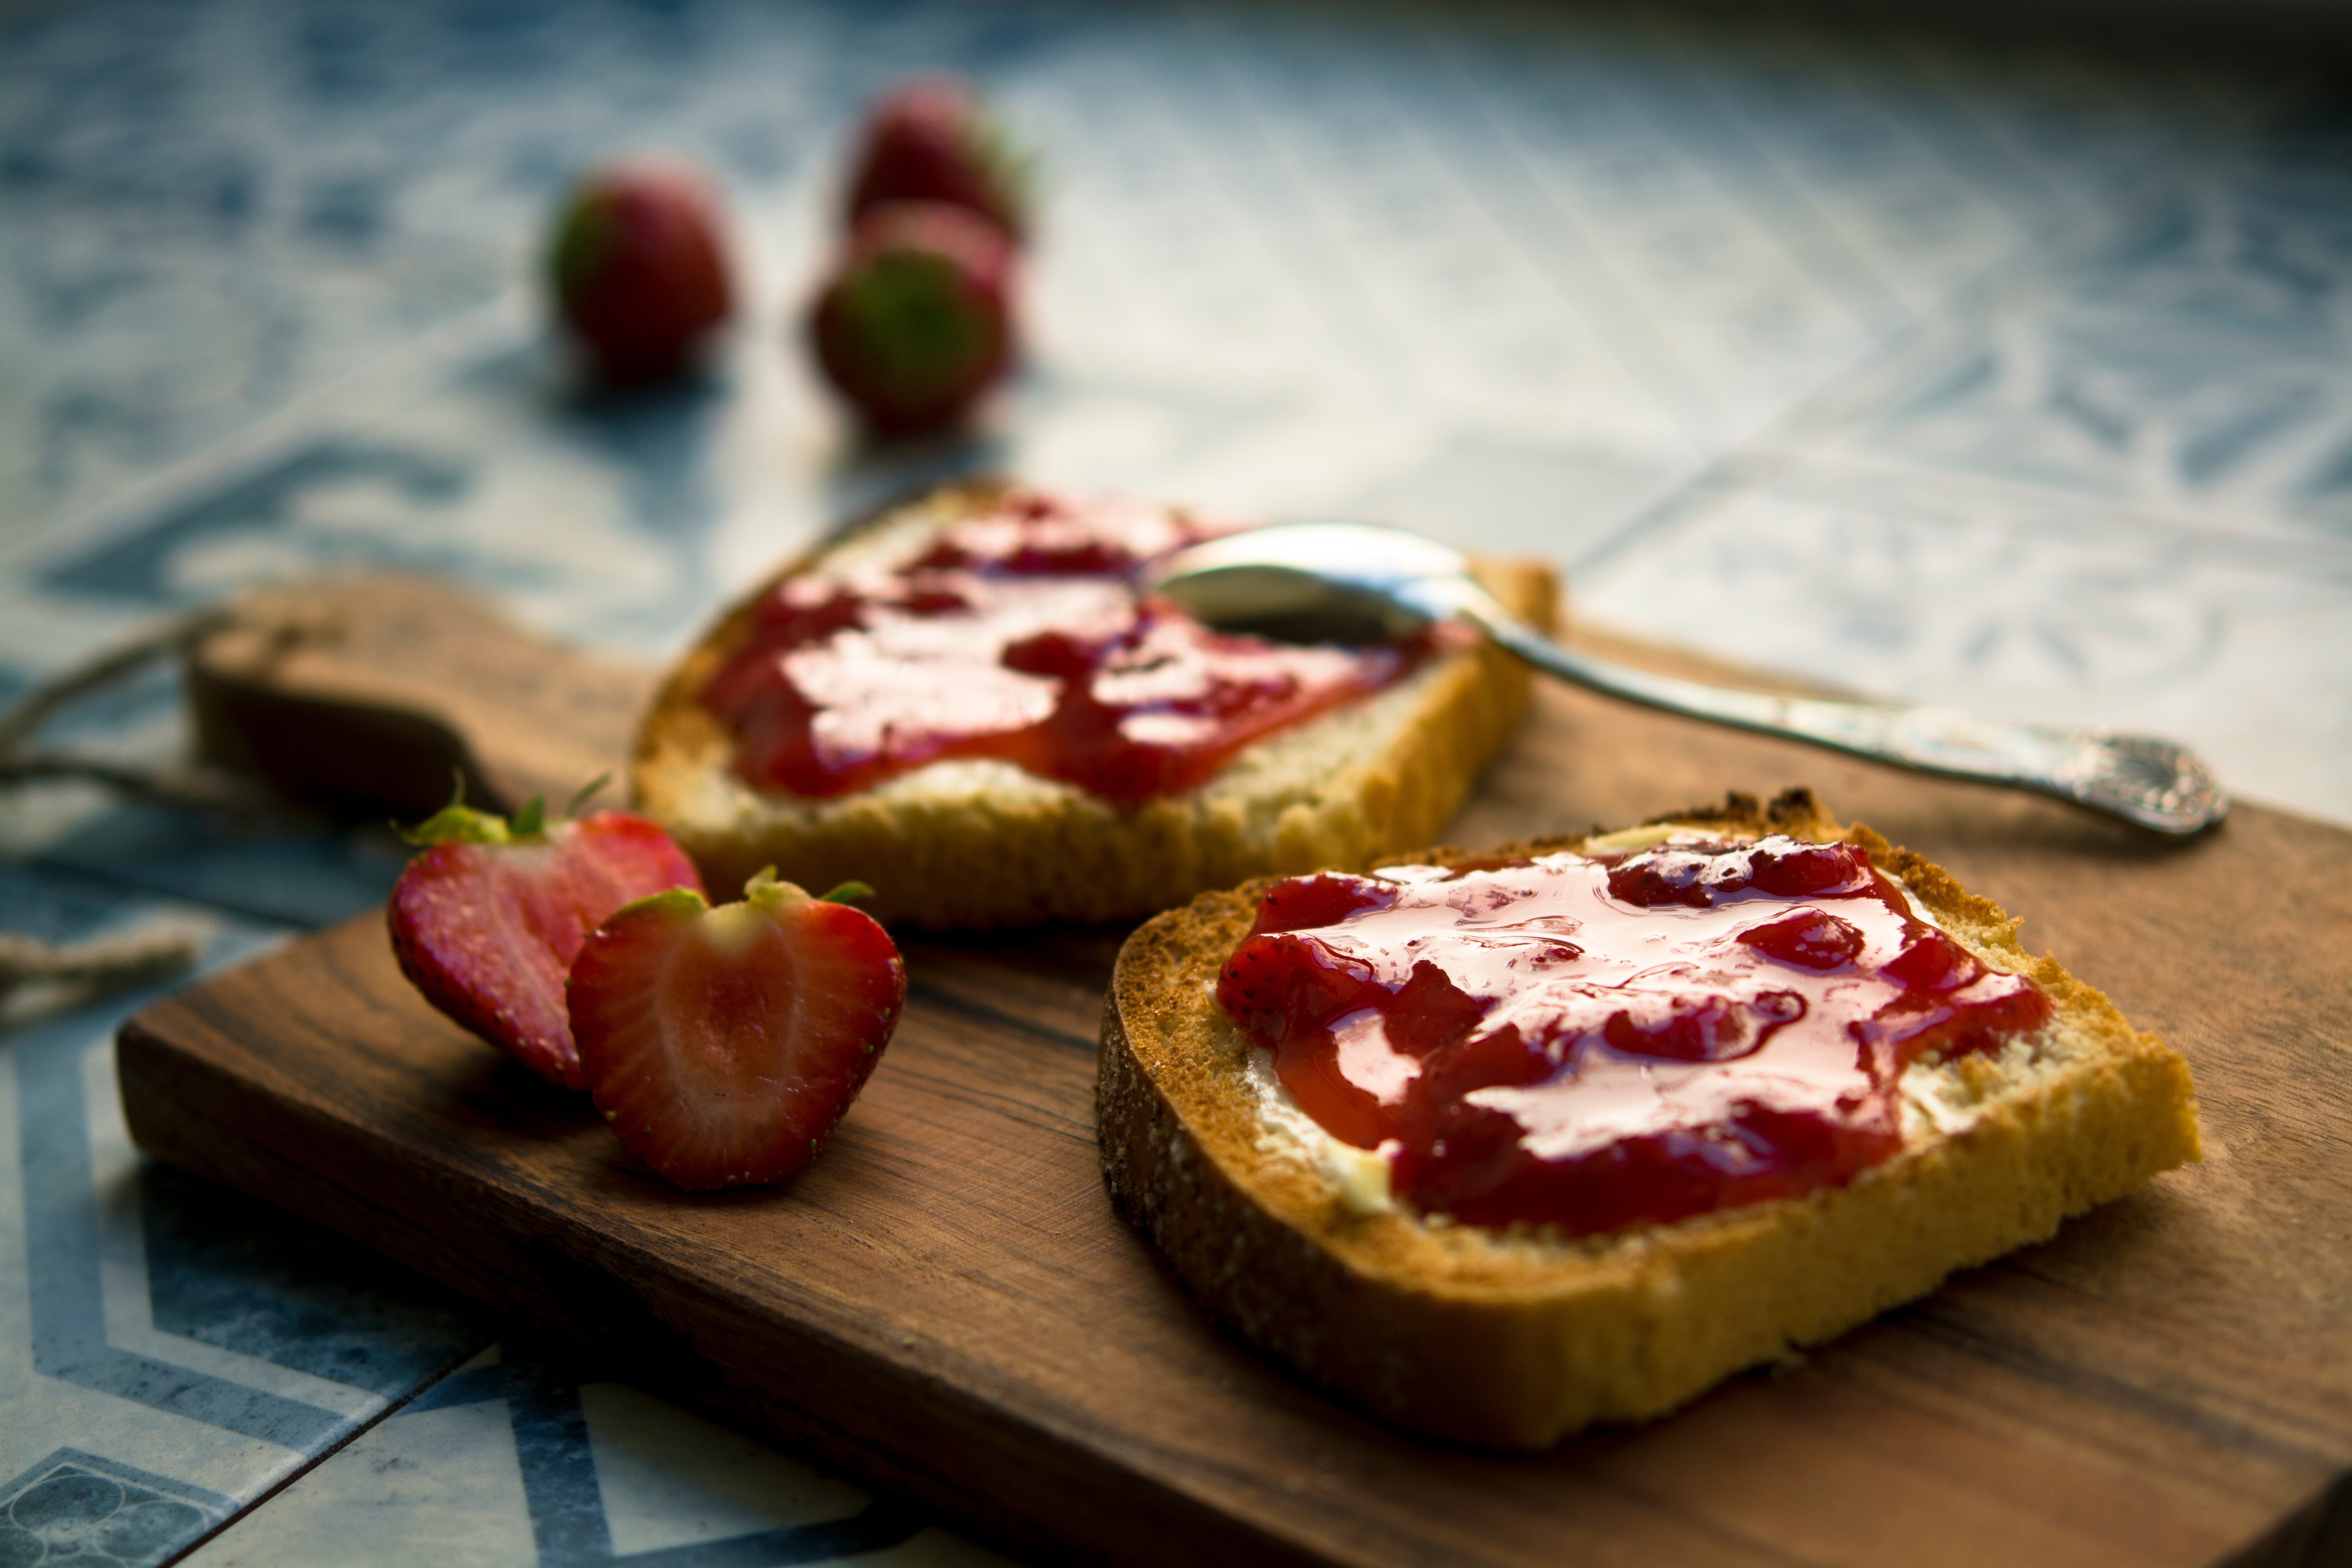 Strawberry jam spread on bread slice